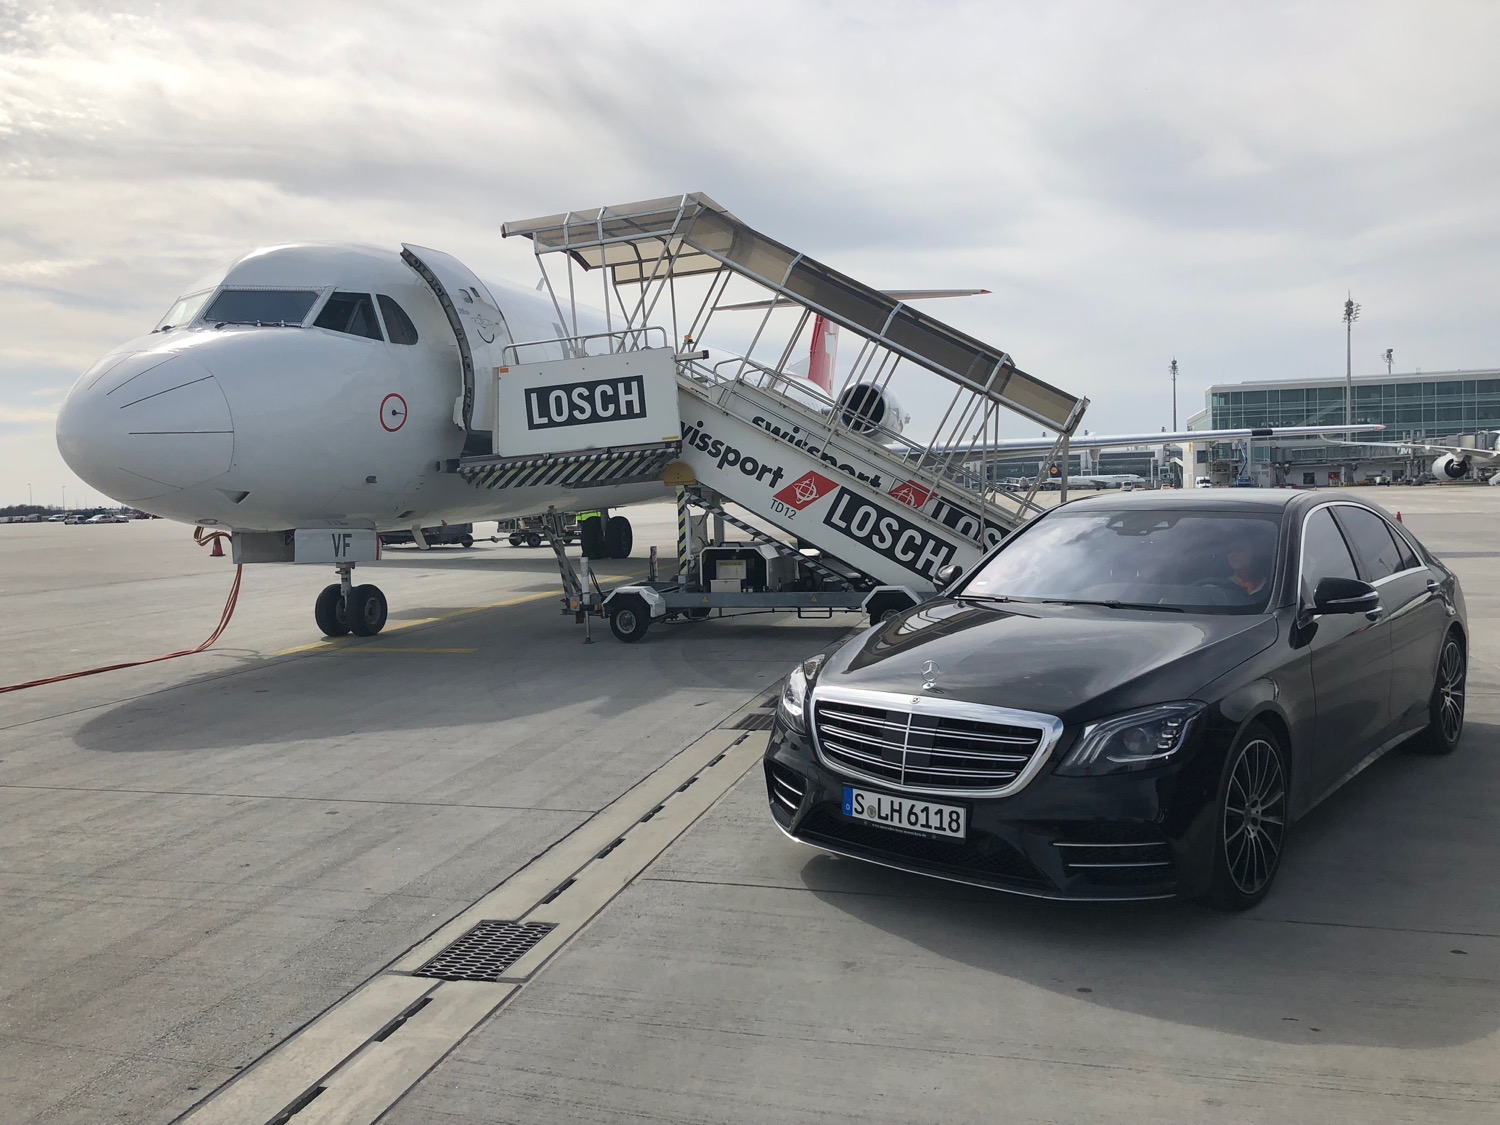 a car parked next to a jet